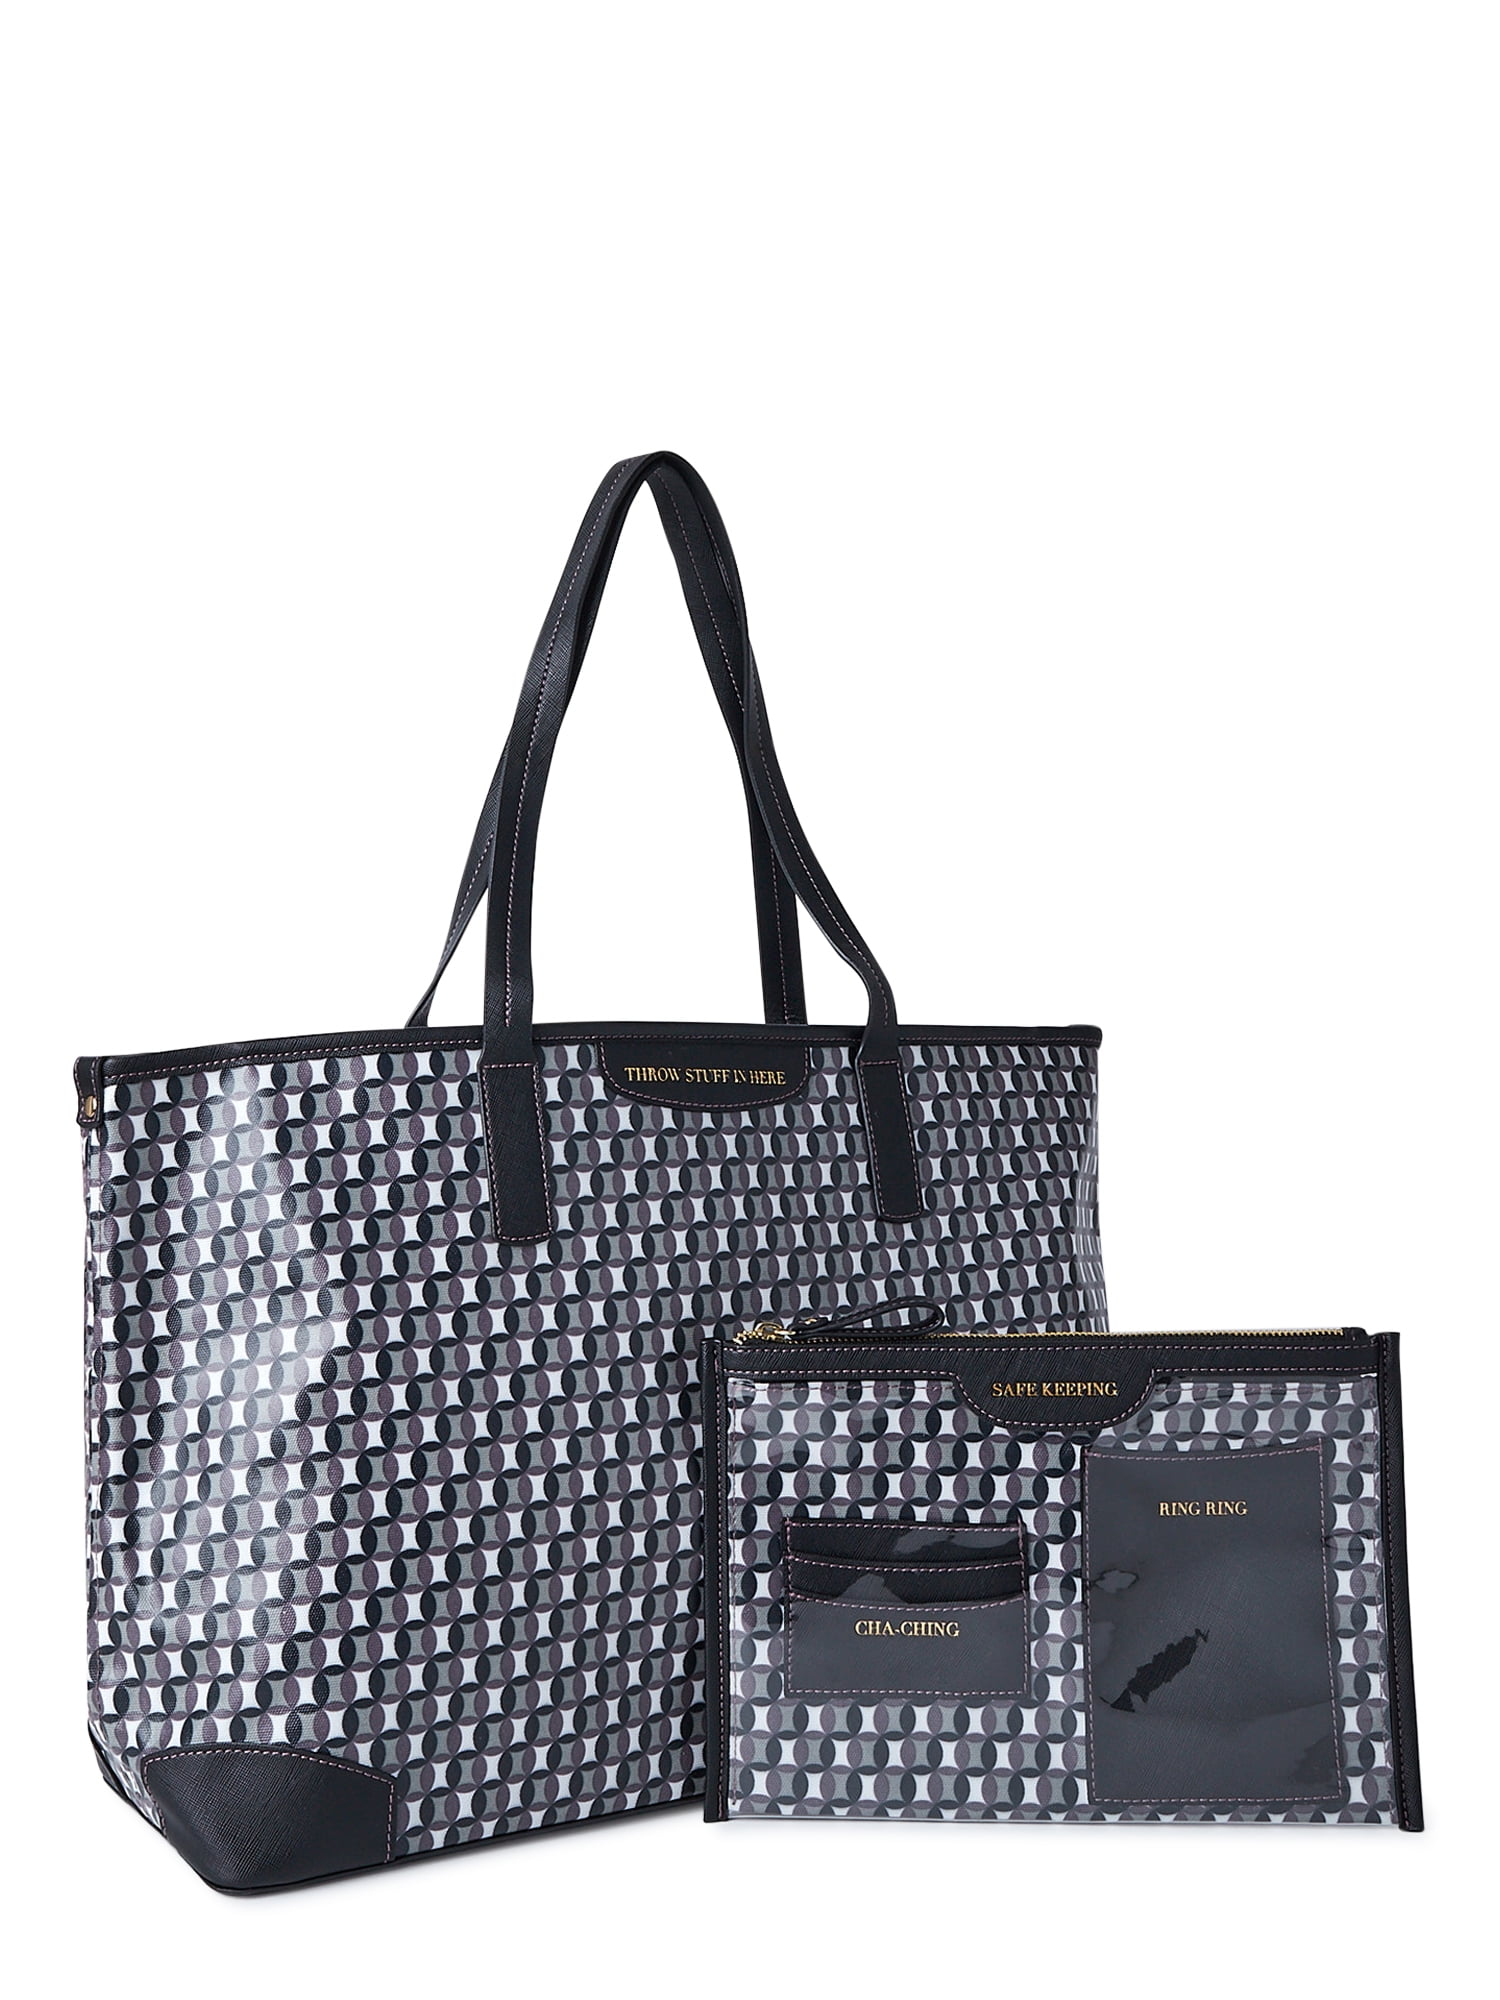 Printed Polyurethane Christian Dior Tote Bag